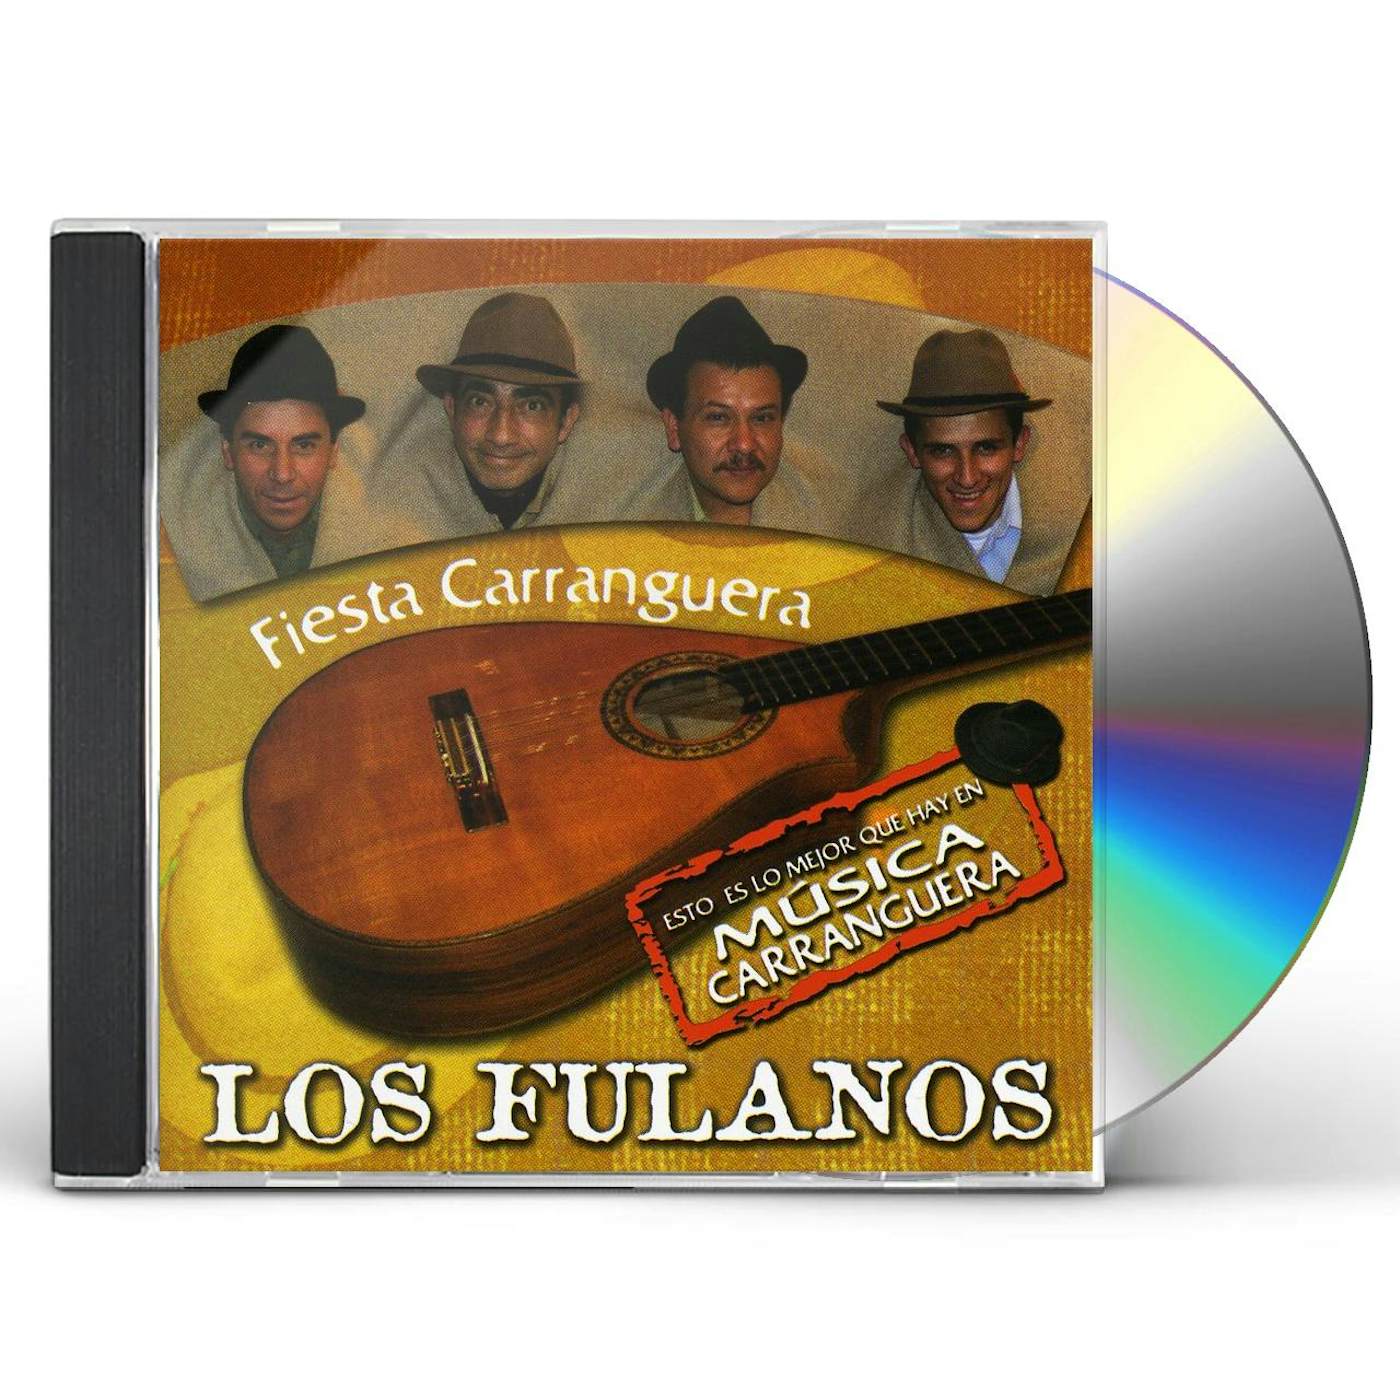 Los Fulanos FIESTA CARRANGUERA CD